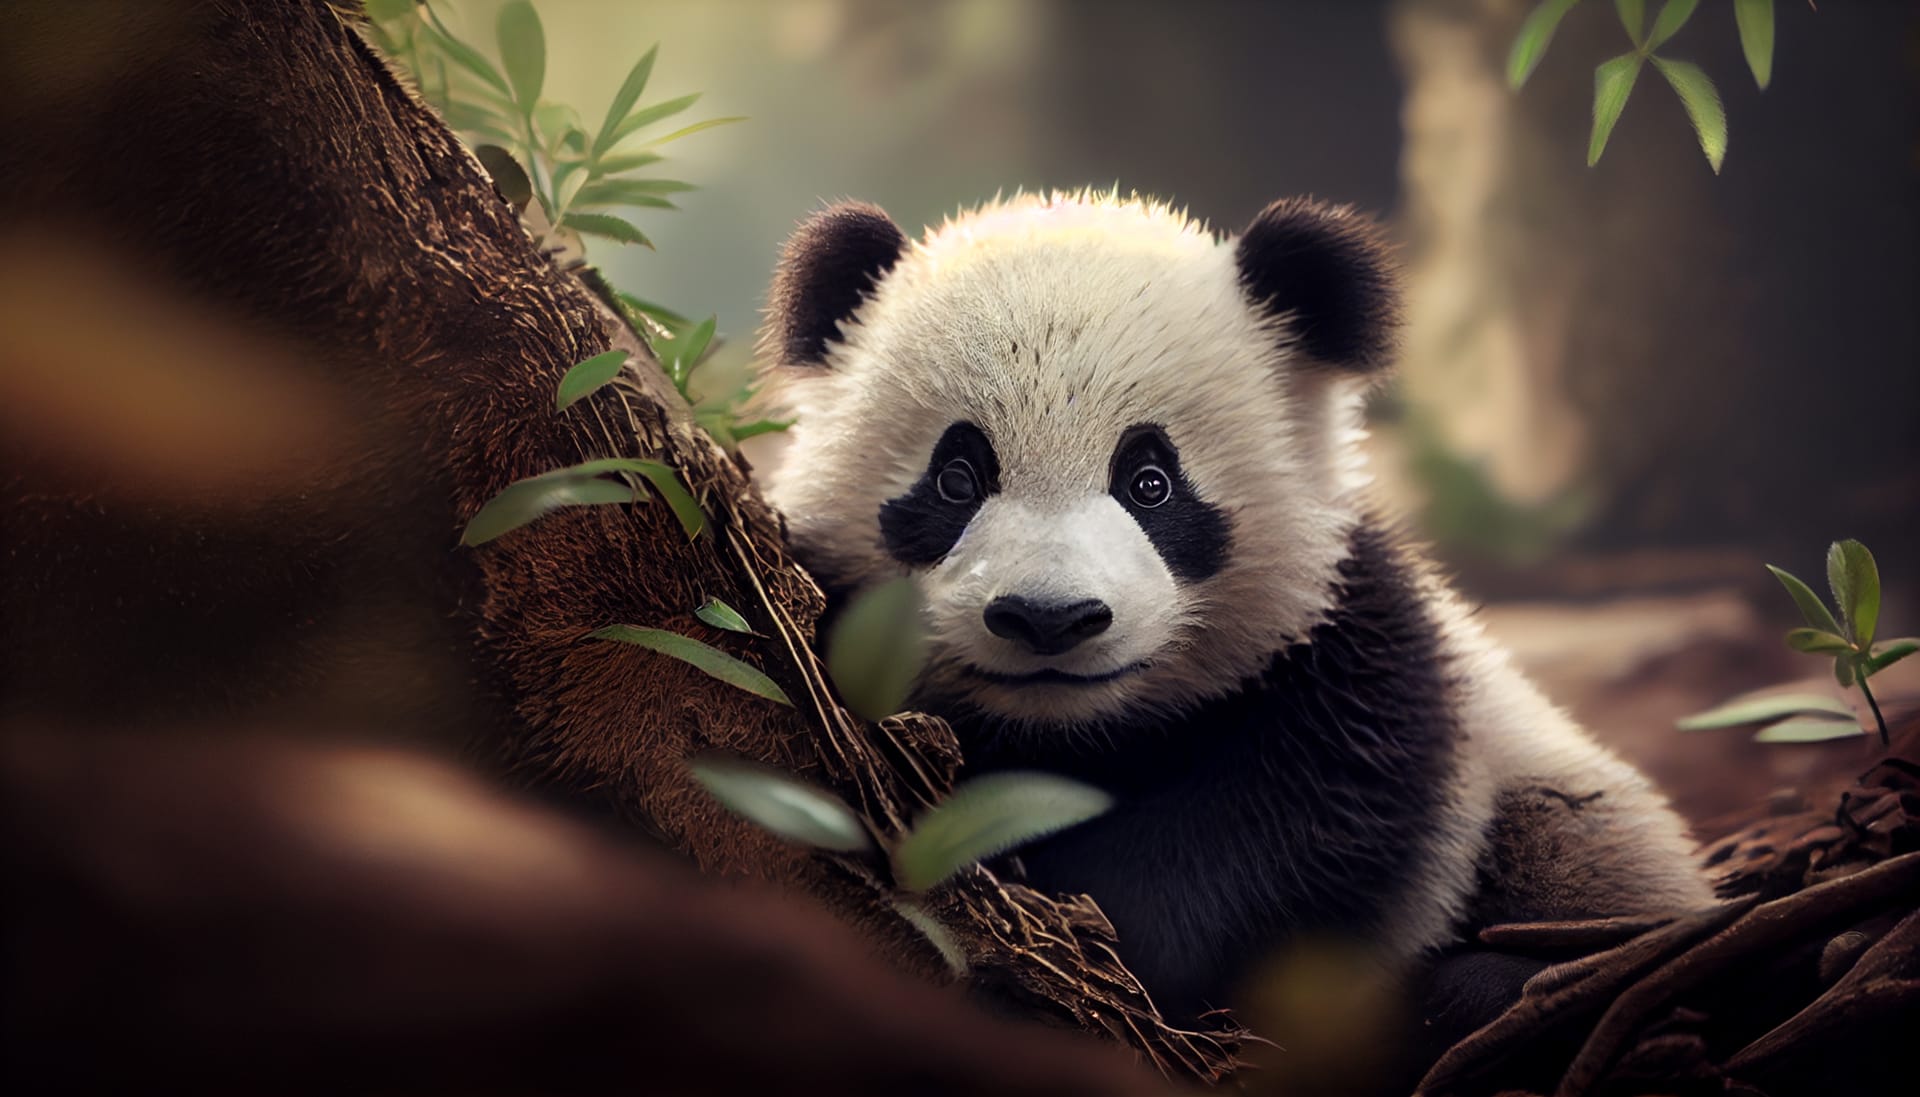 Beauty panda bear wild animal scene